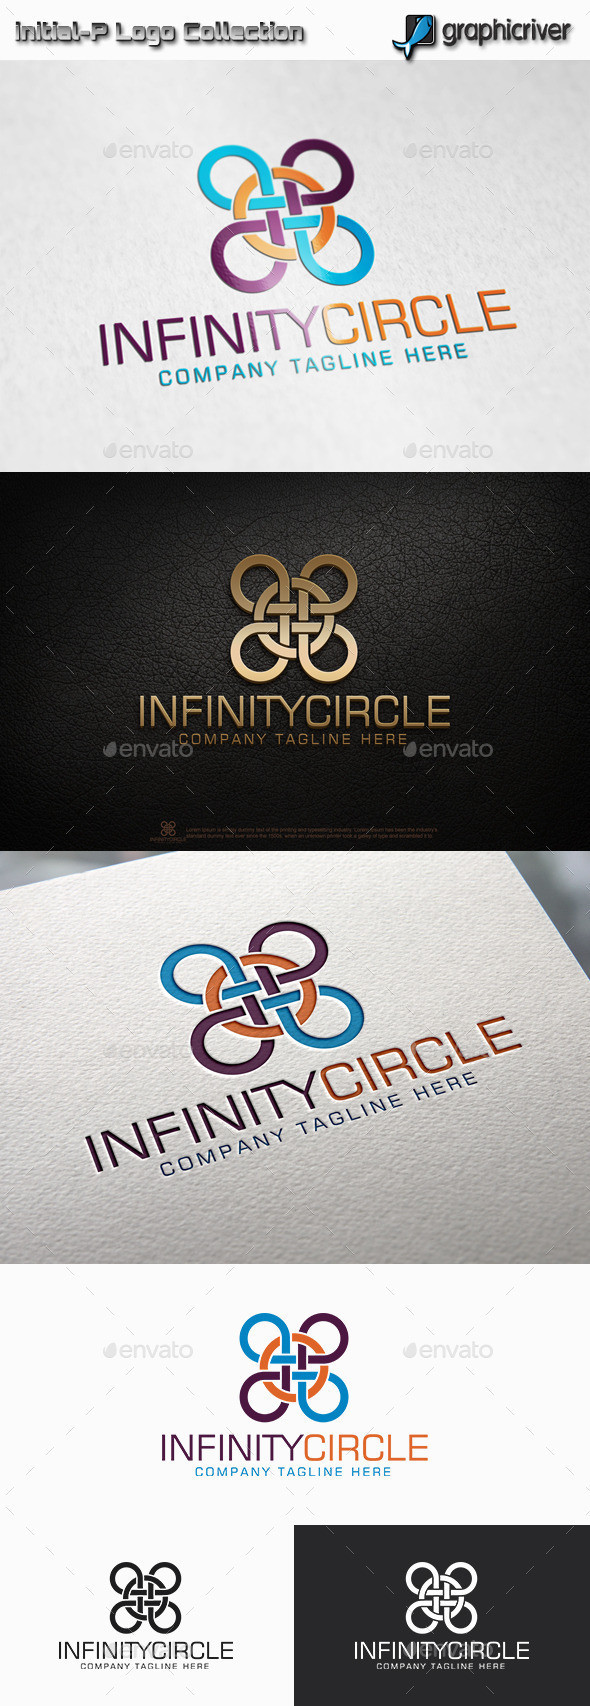 Infinitycircle 20preview